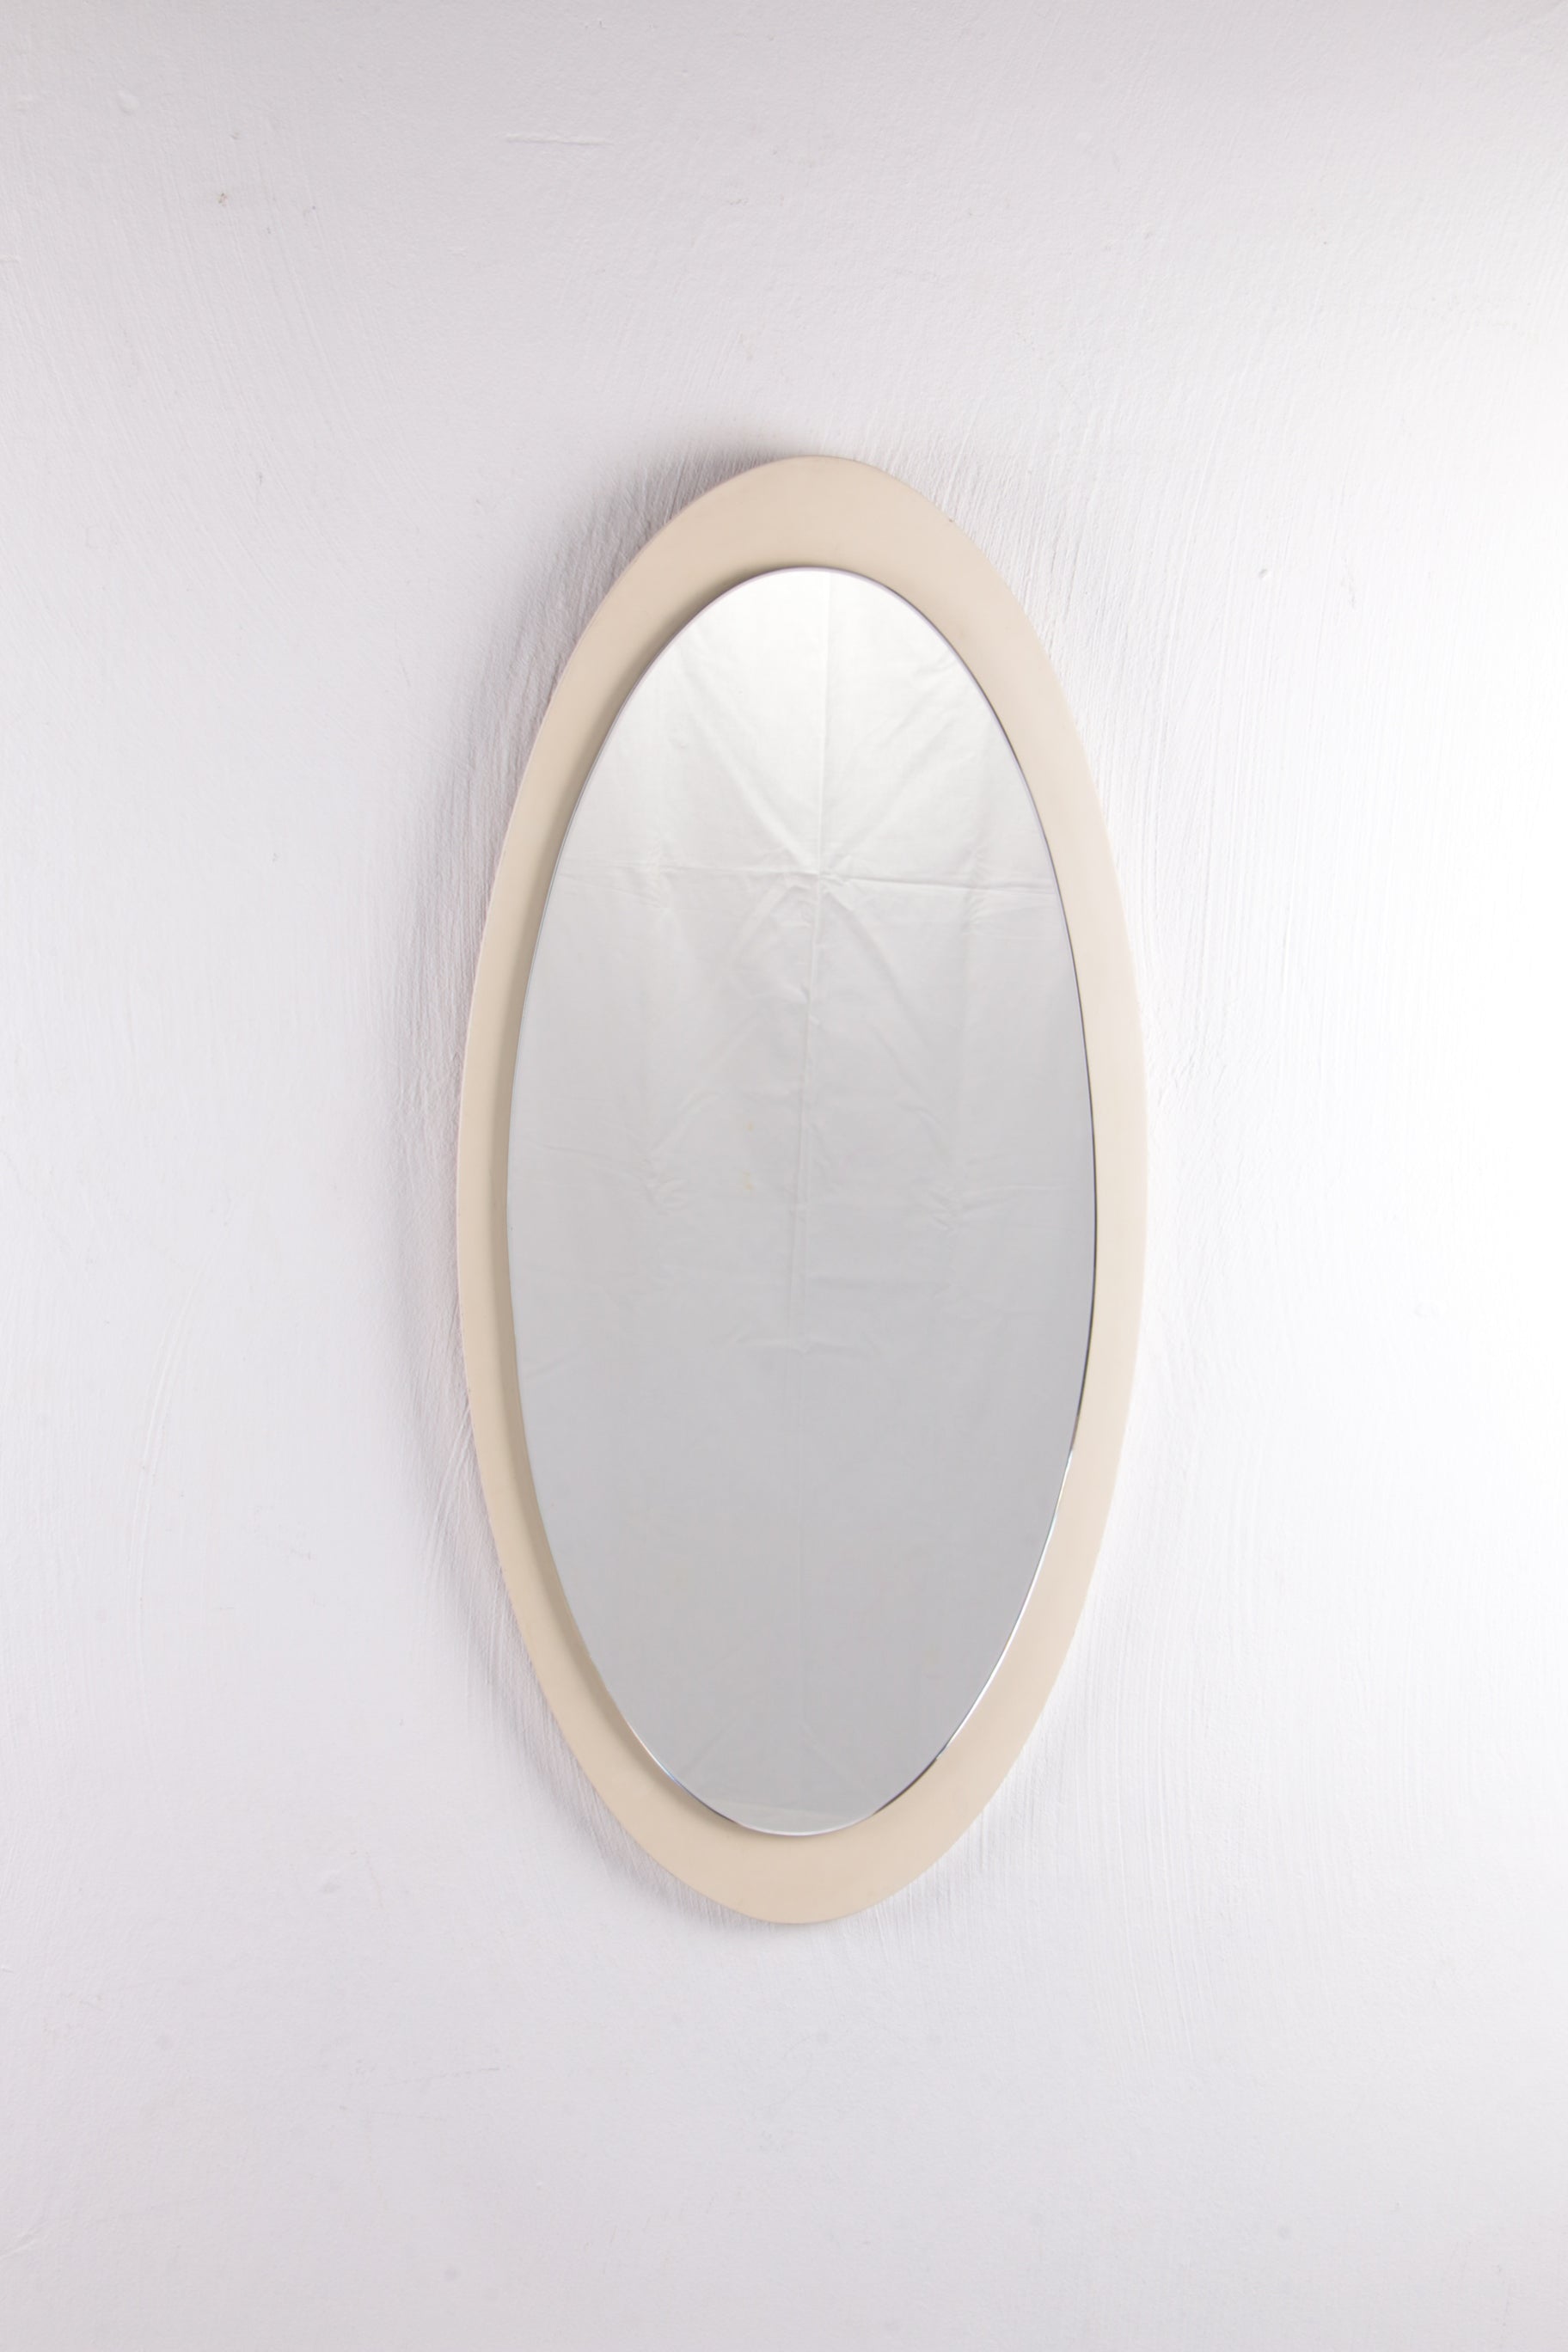 passen Ochtend Structureel Vintage Grote wit houten Ovale Wandspiegel jaren60s – Timeless-Art